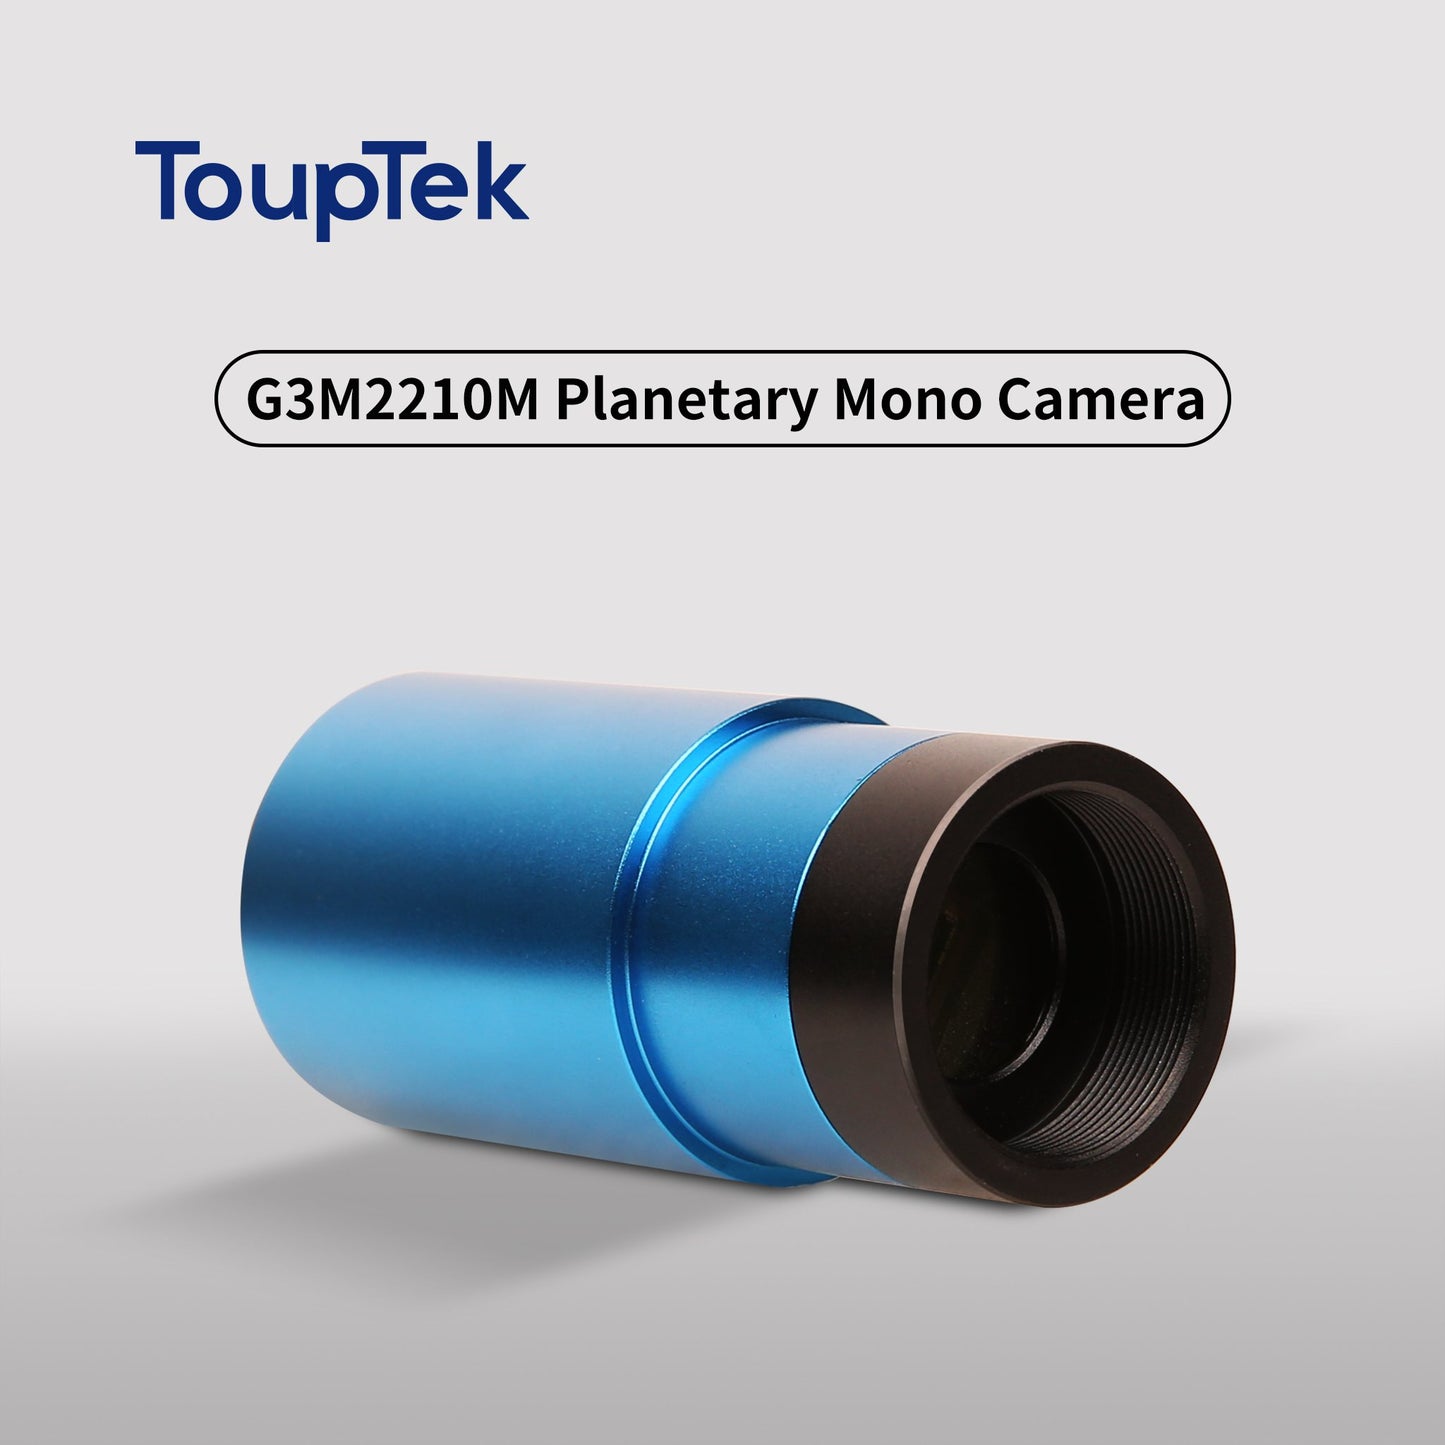 G3M2210M Planetary Mono Camera